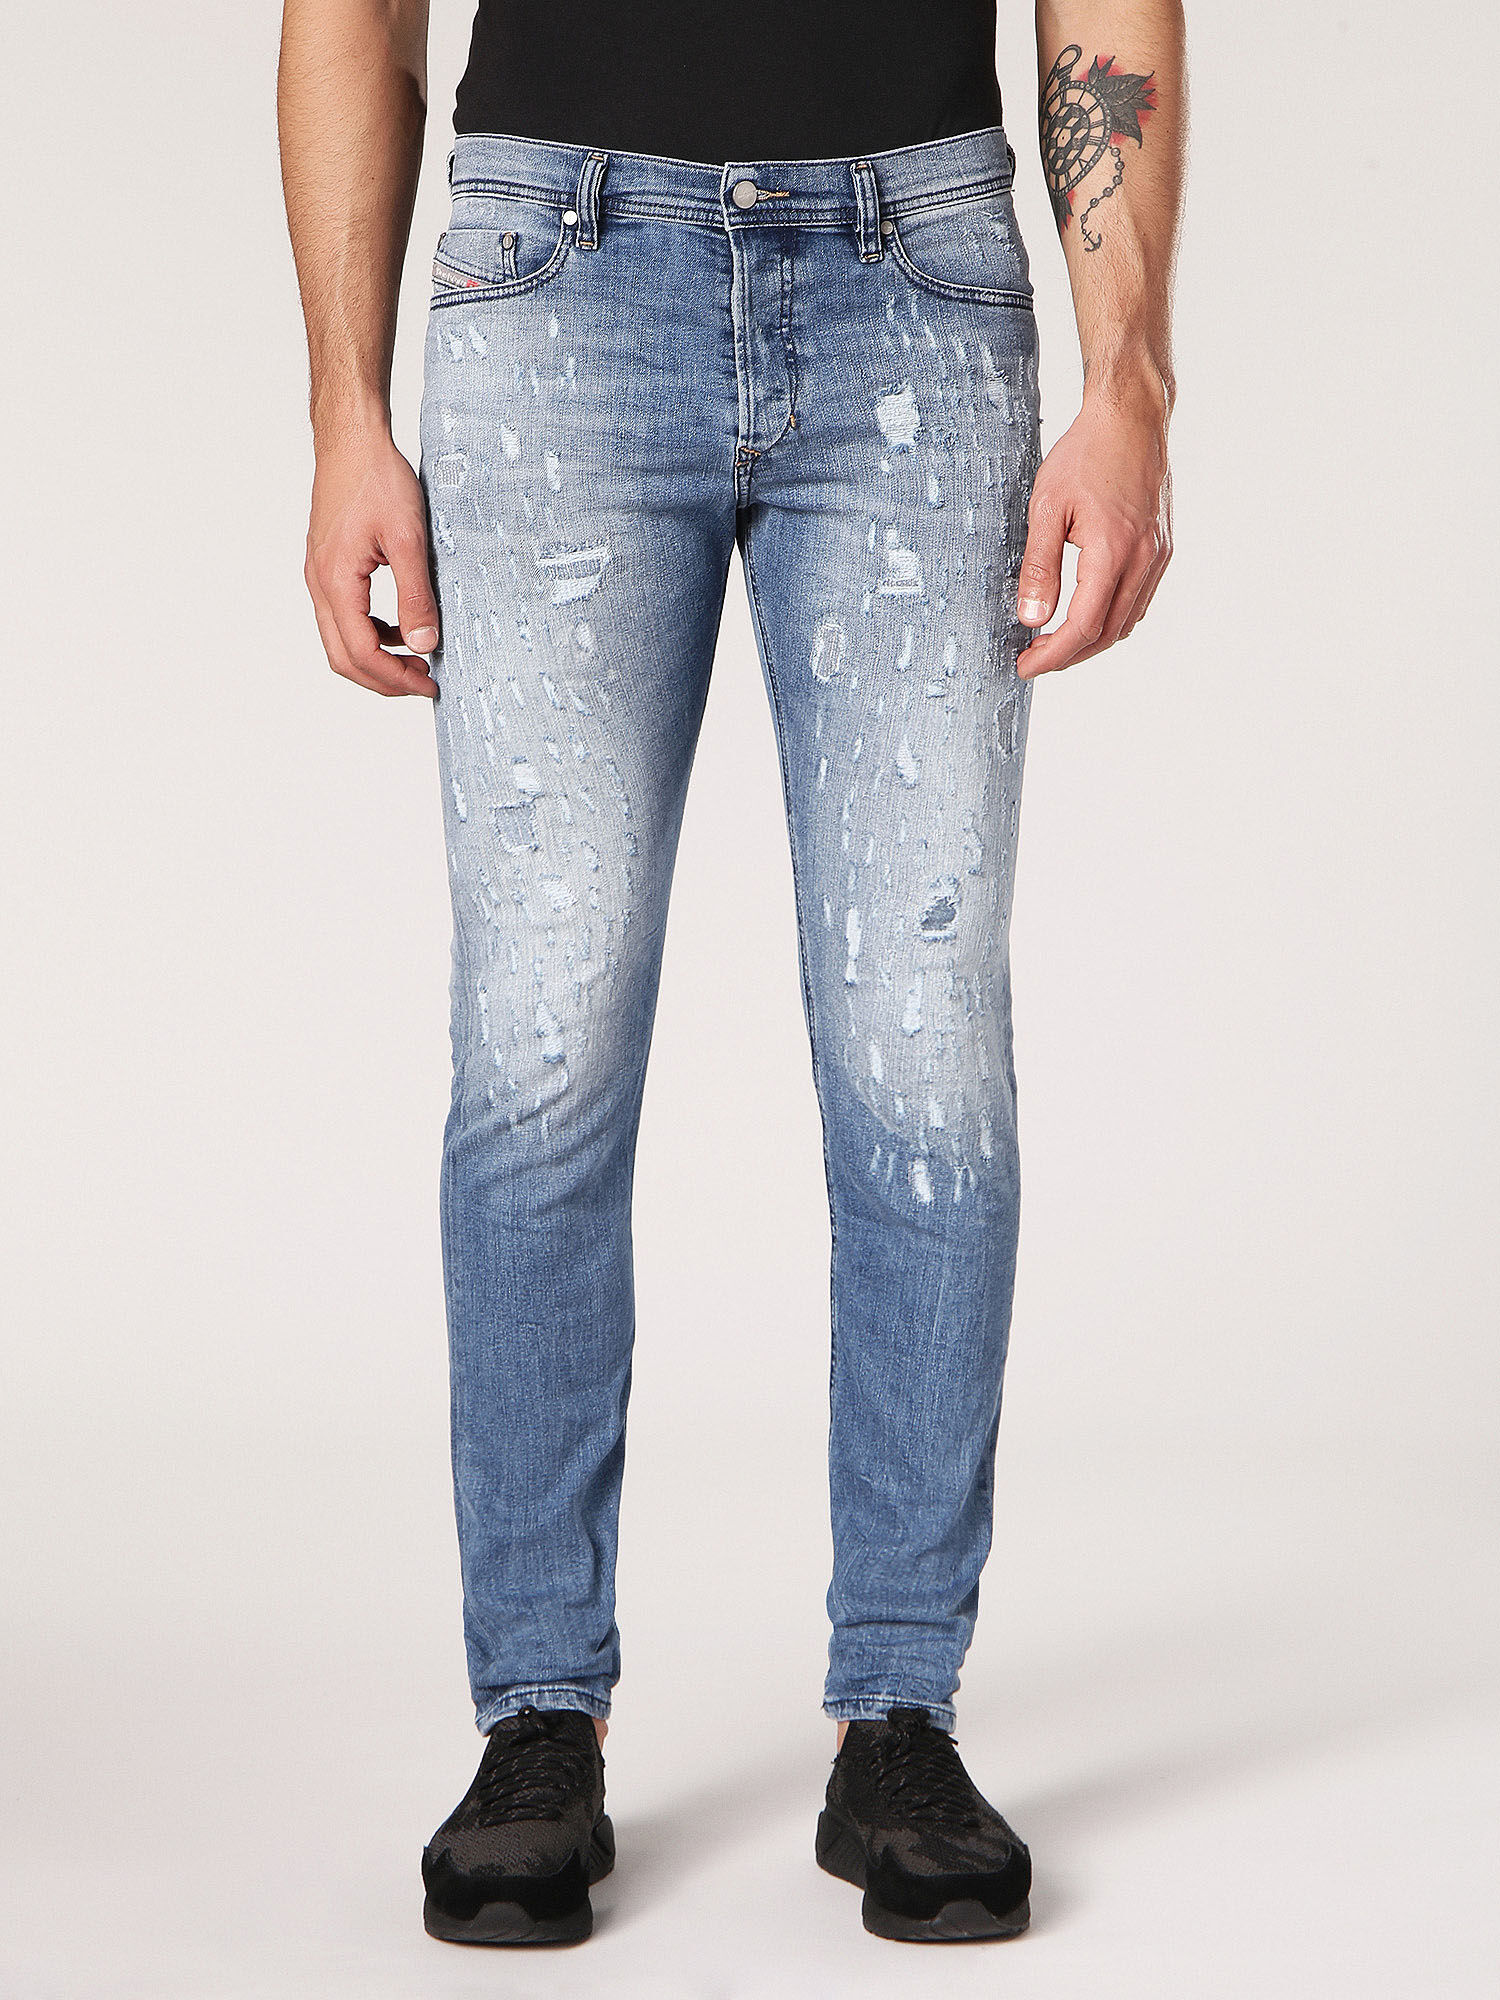 grey slim straight jeans